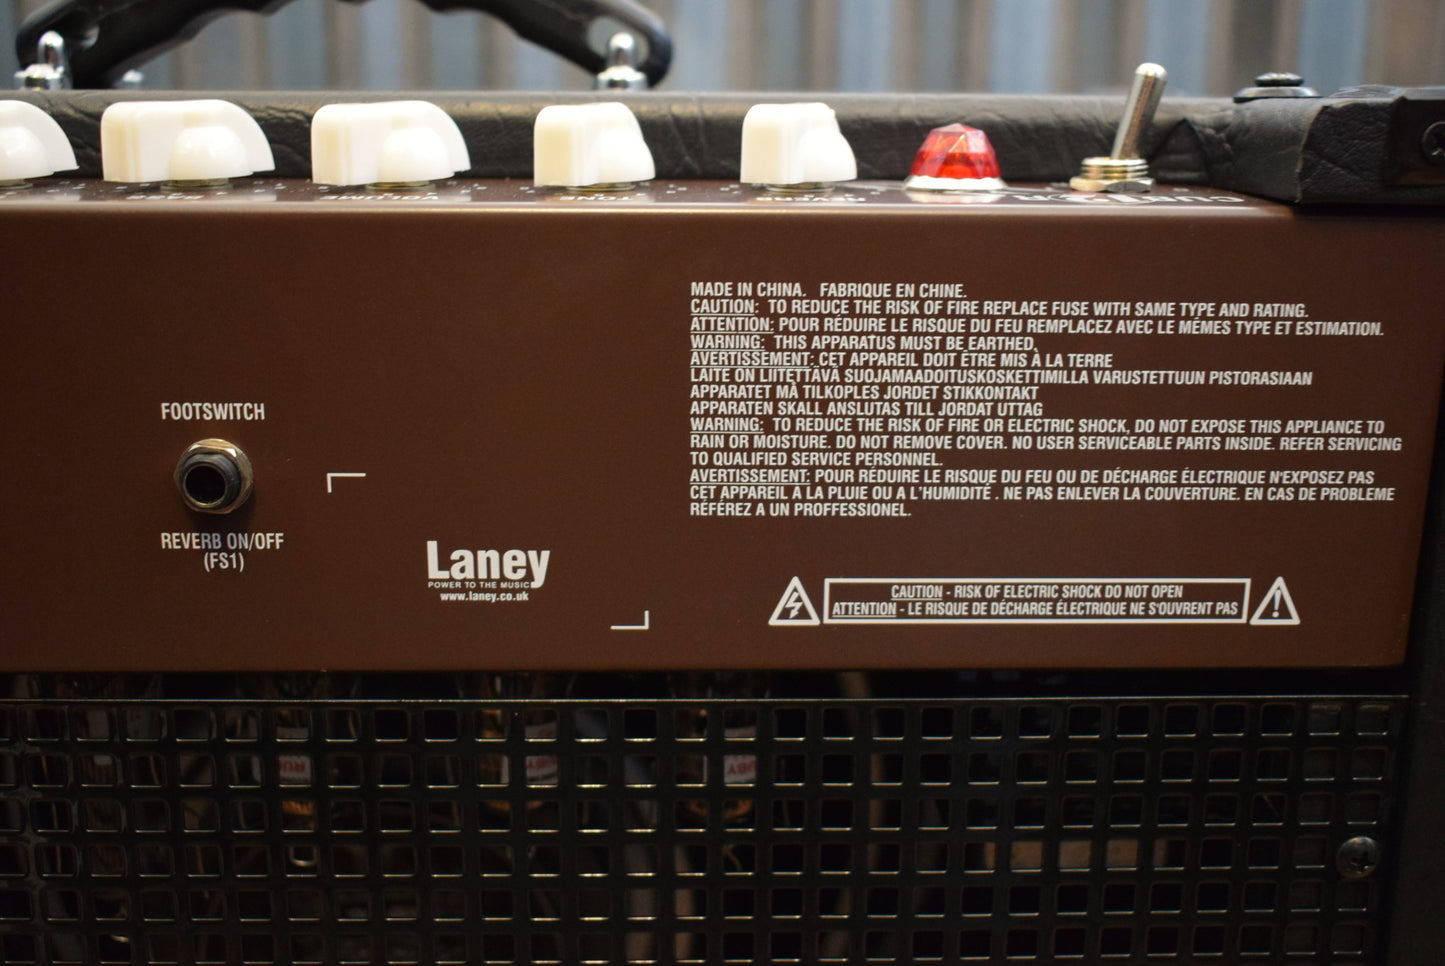 Laney CUB 12R Class AB 15 Watt Tube 12" Reverb Guitar Combo Amplifier